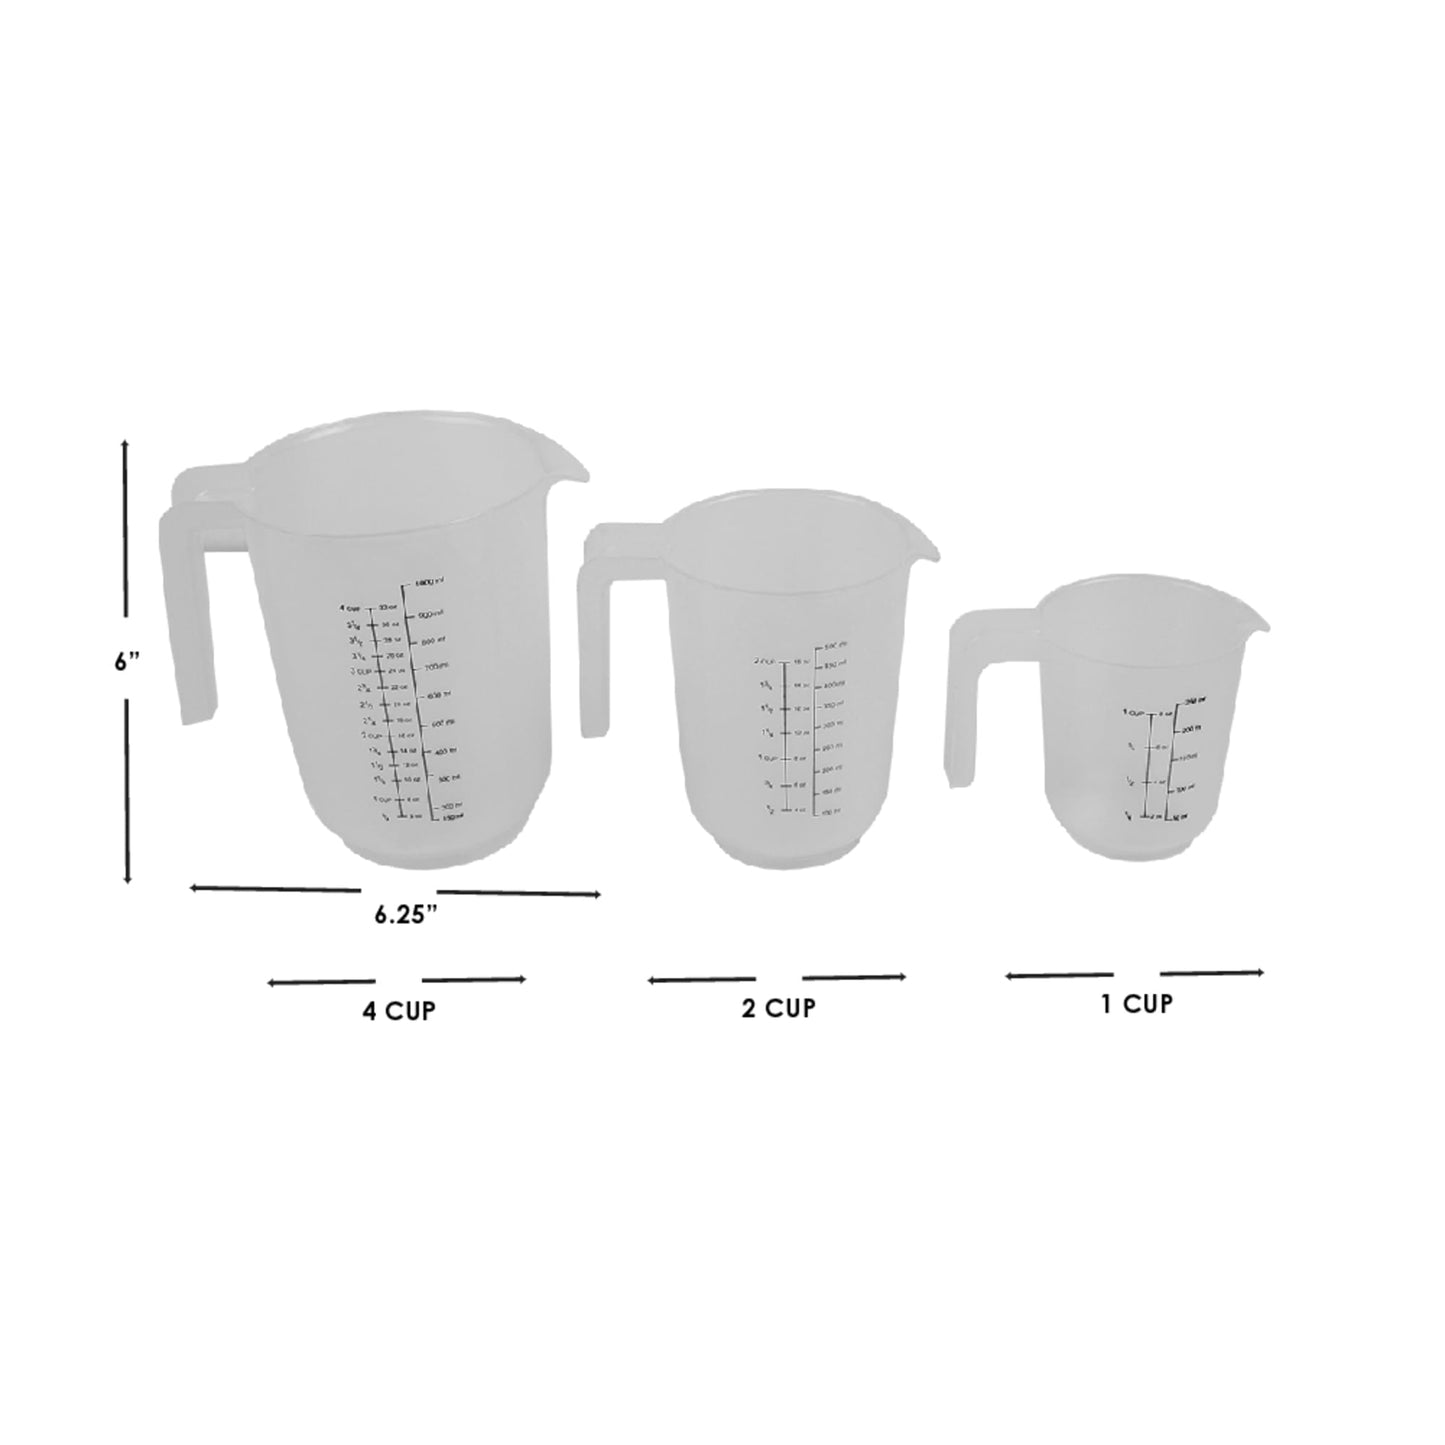 Precise Pour 3 Piece Plastic Measuring Cup Set with Short Easy Grip Handles, Clear